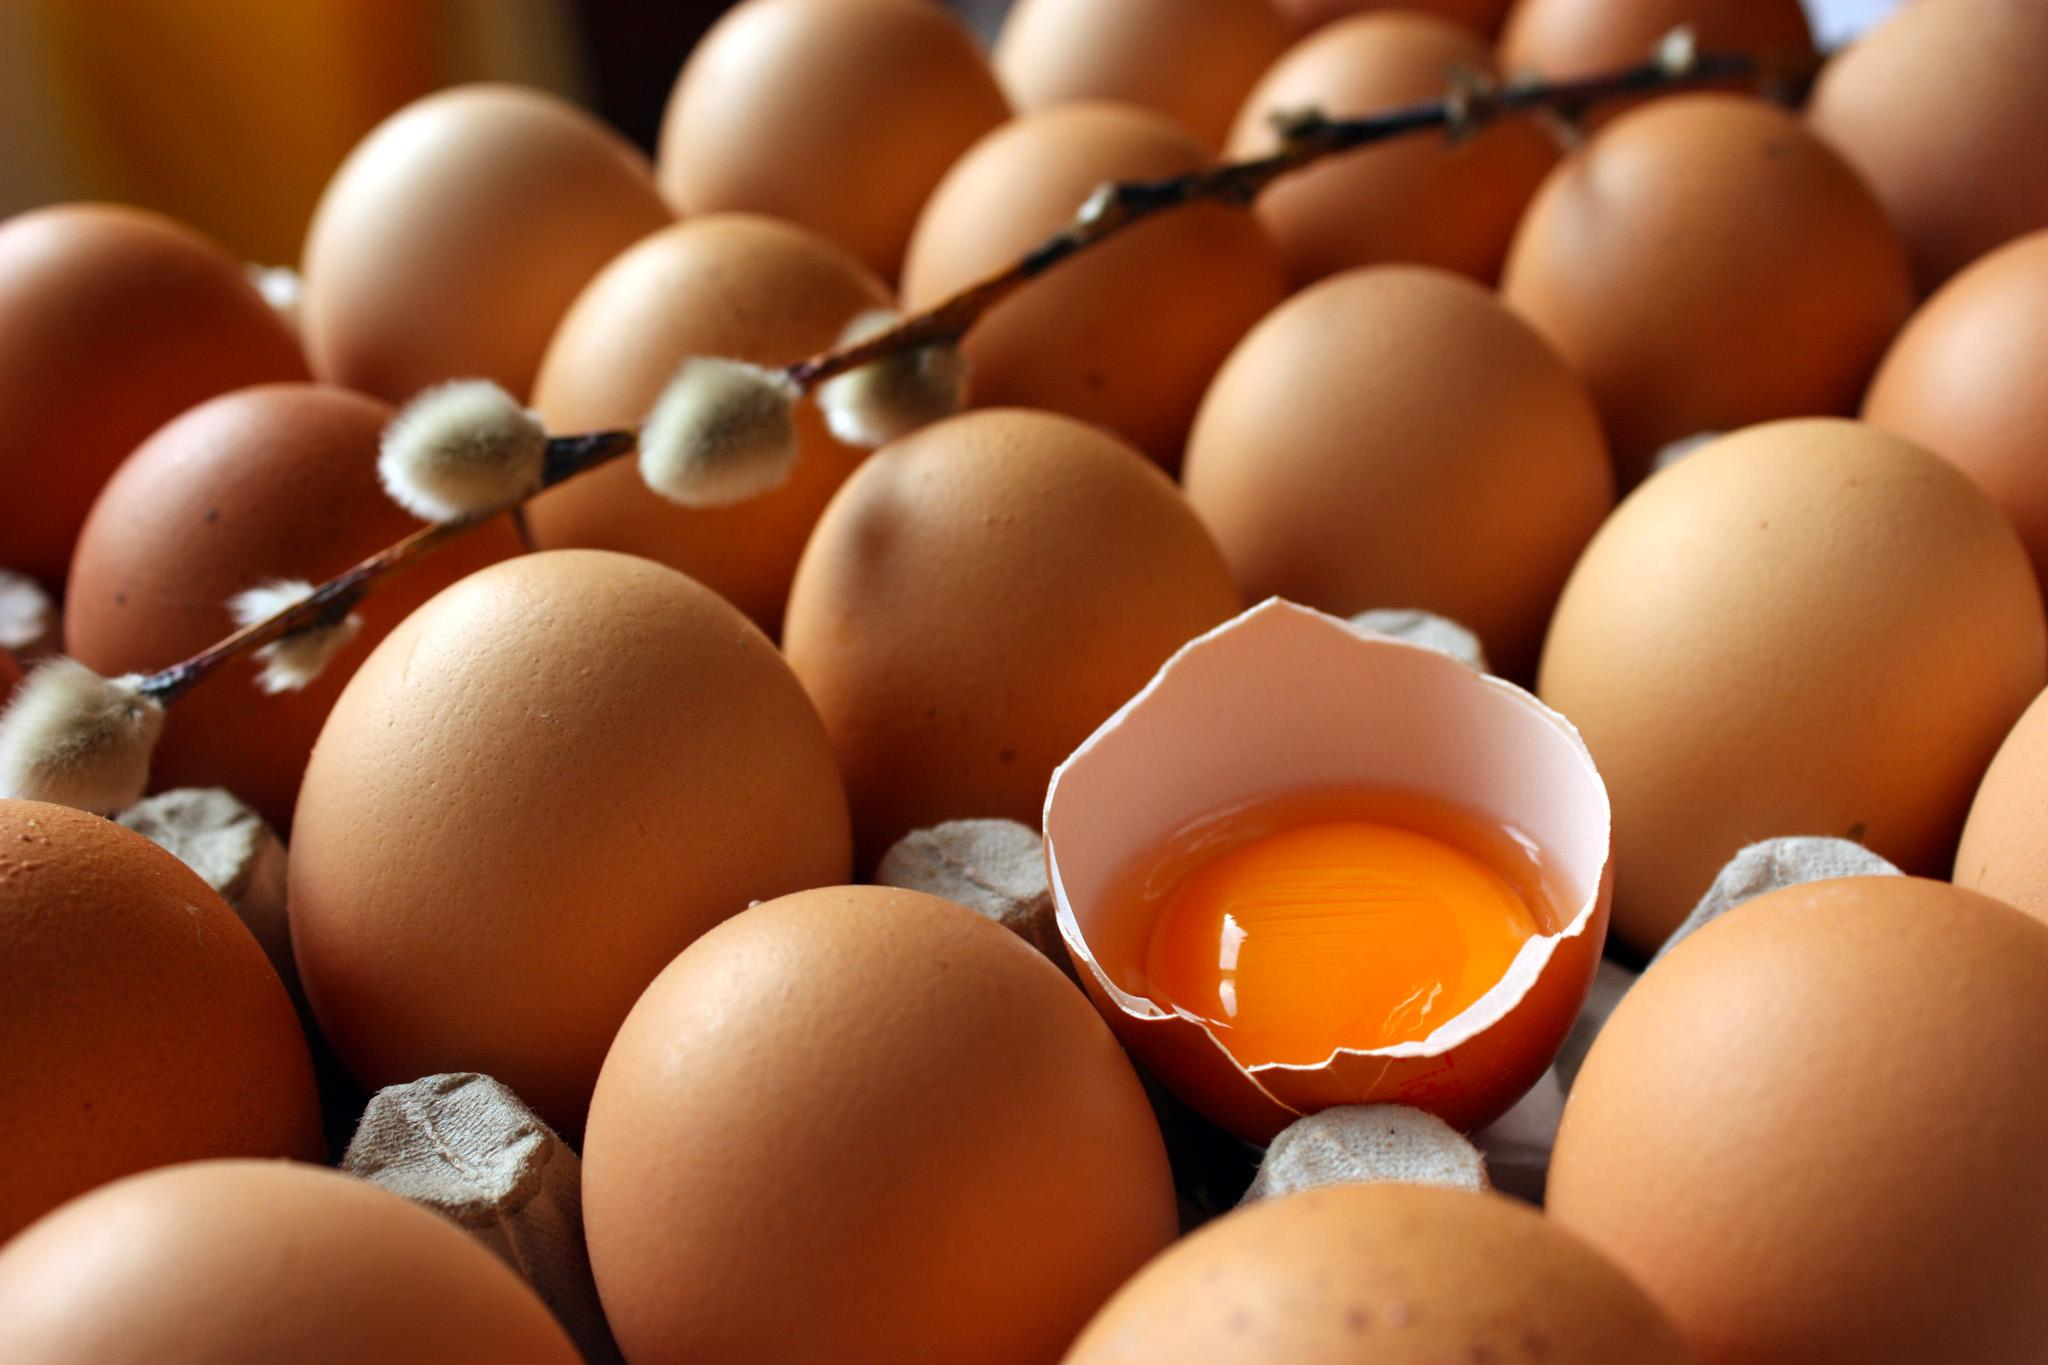 ФАС проверит 12 производителей куриного мяса и яиц из-за роста цен